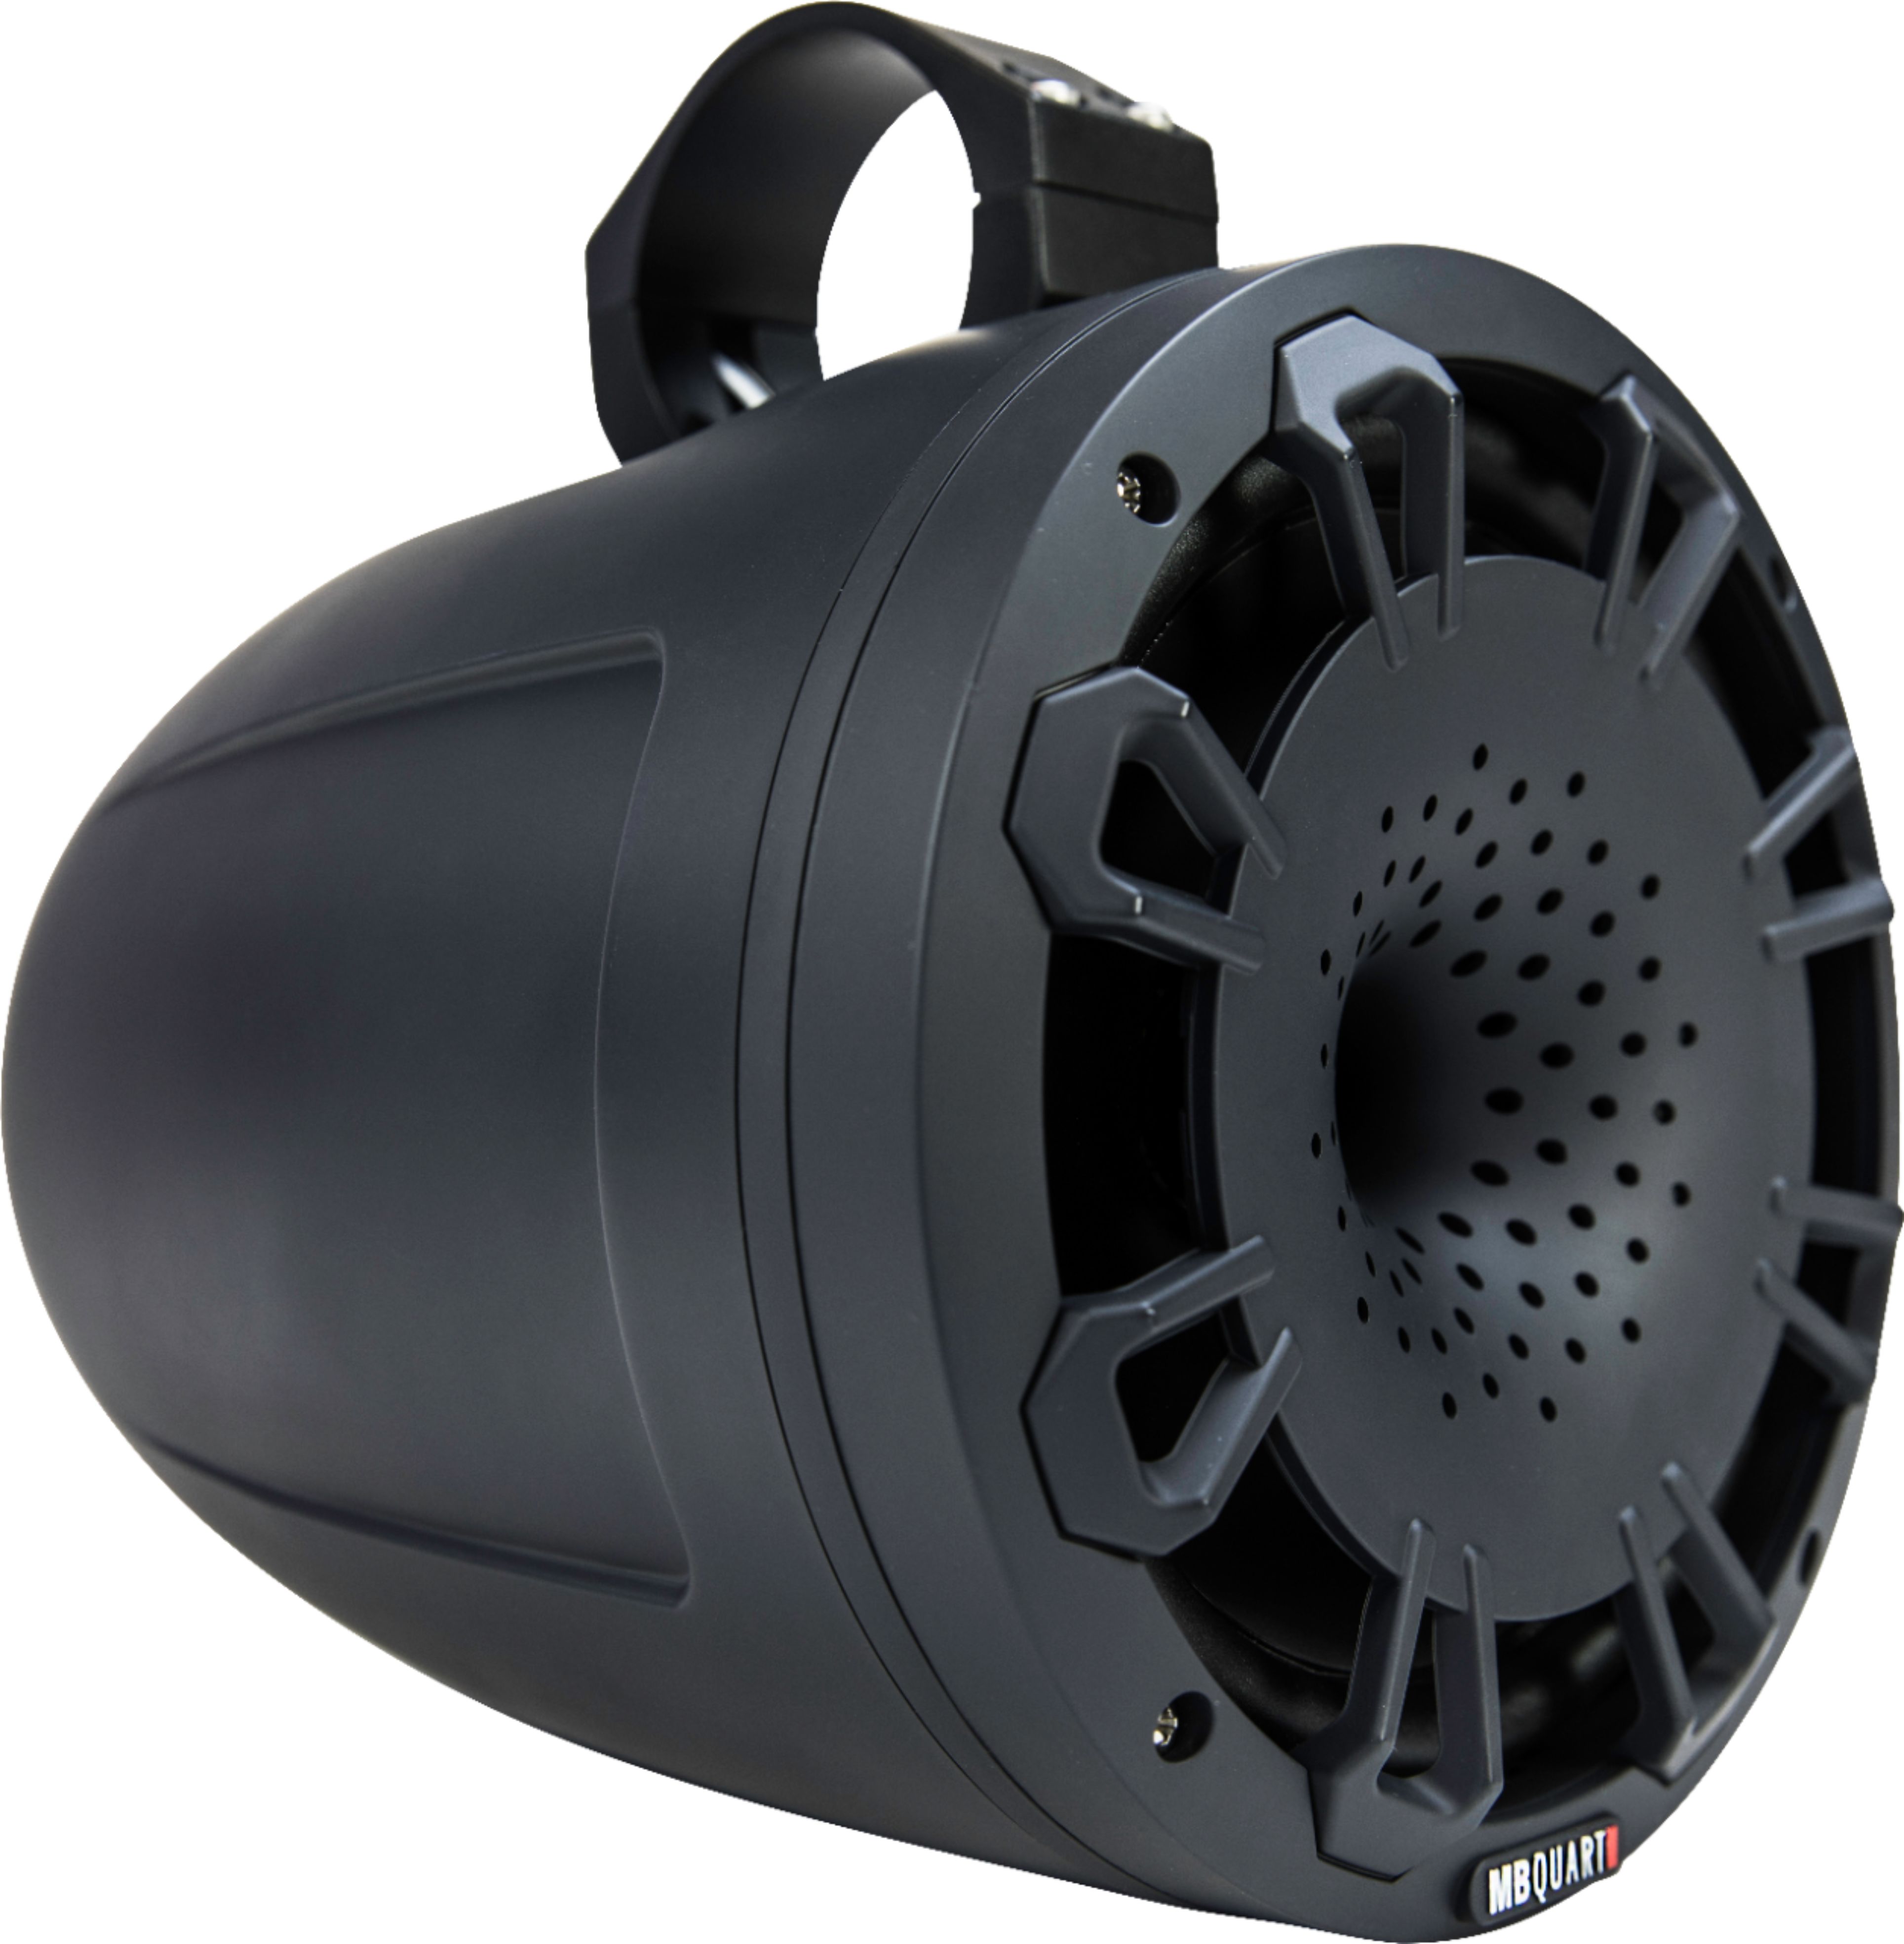 Angle View: Polk Audio - 6" x 9" 2-Way Marine Speakers with Polypropylene Cones (Pair) - Black